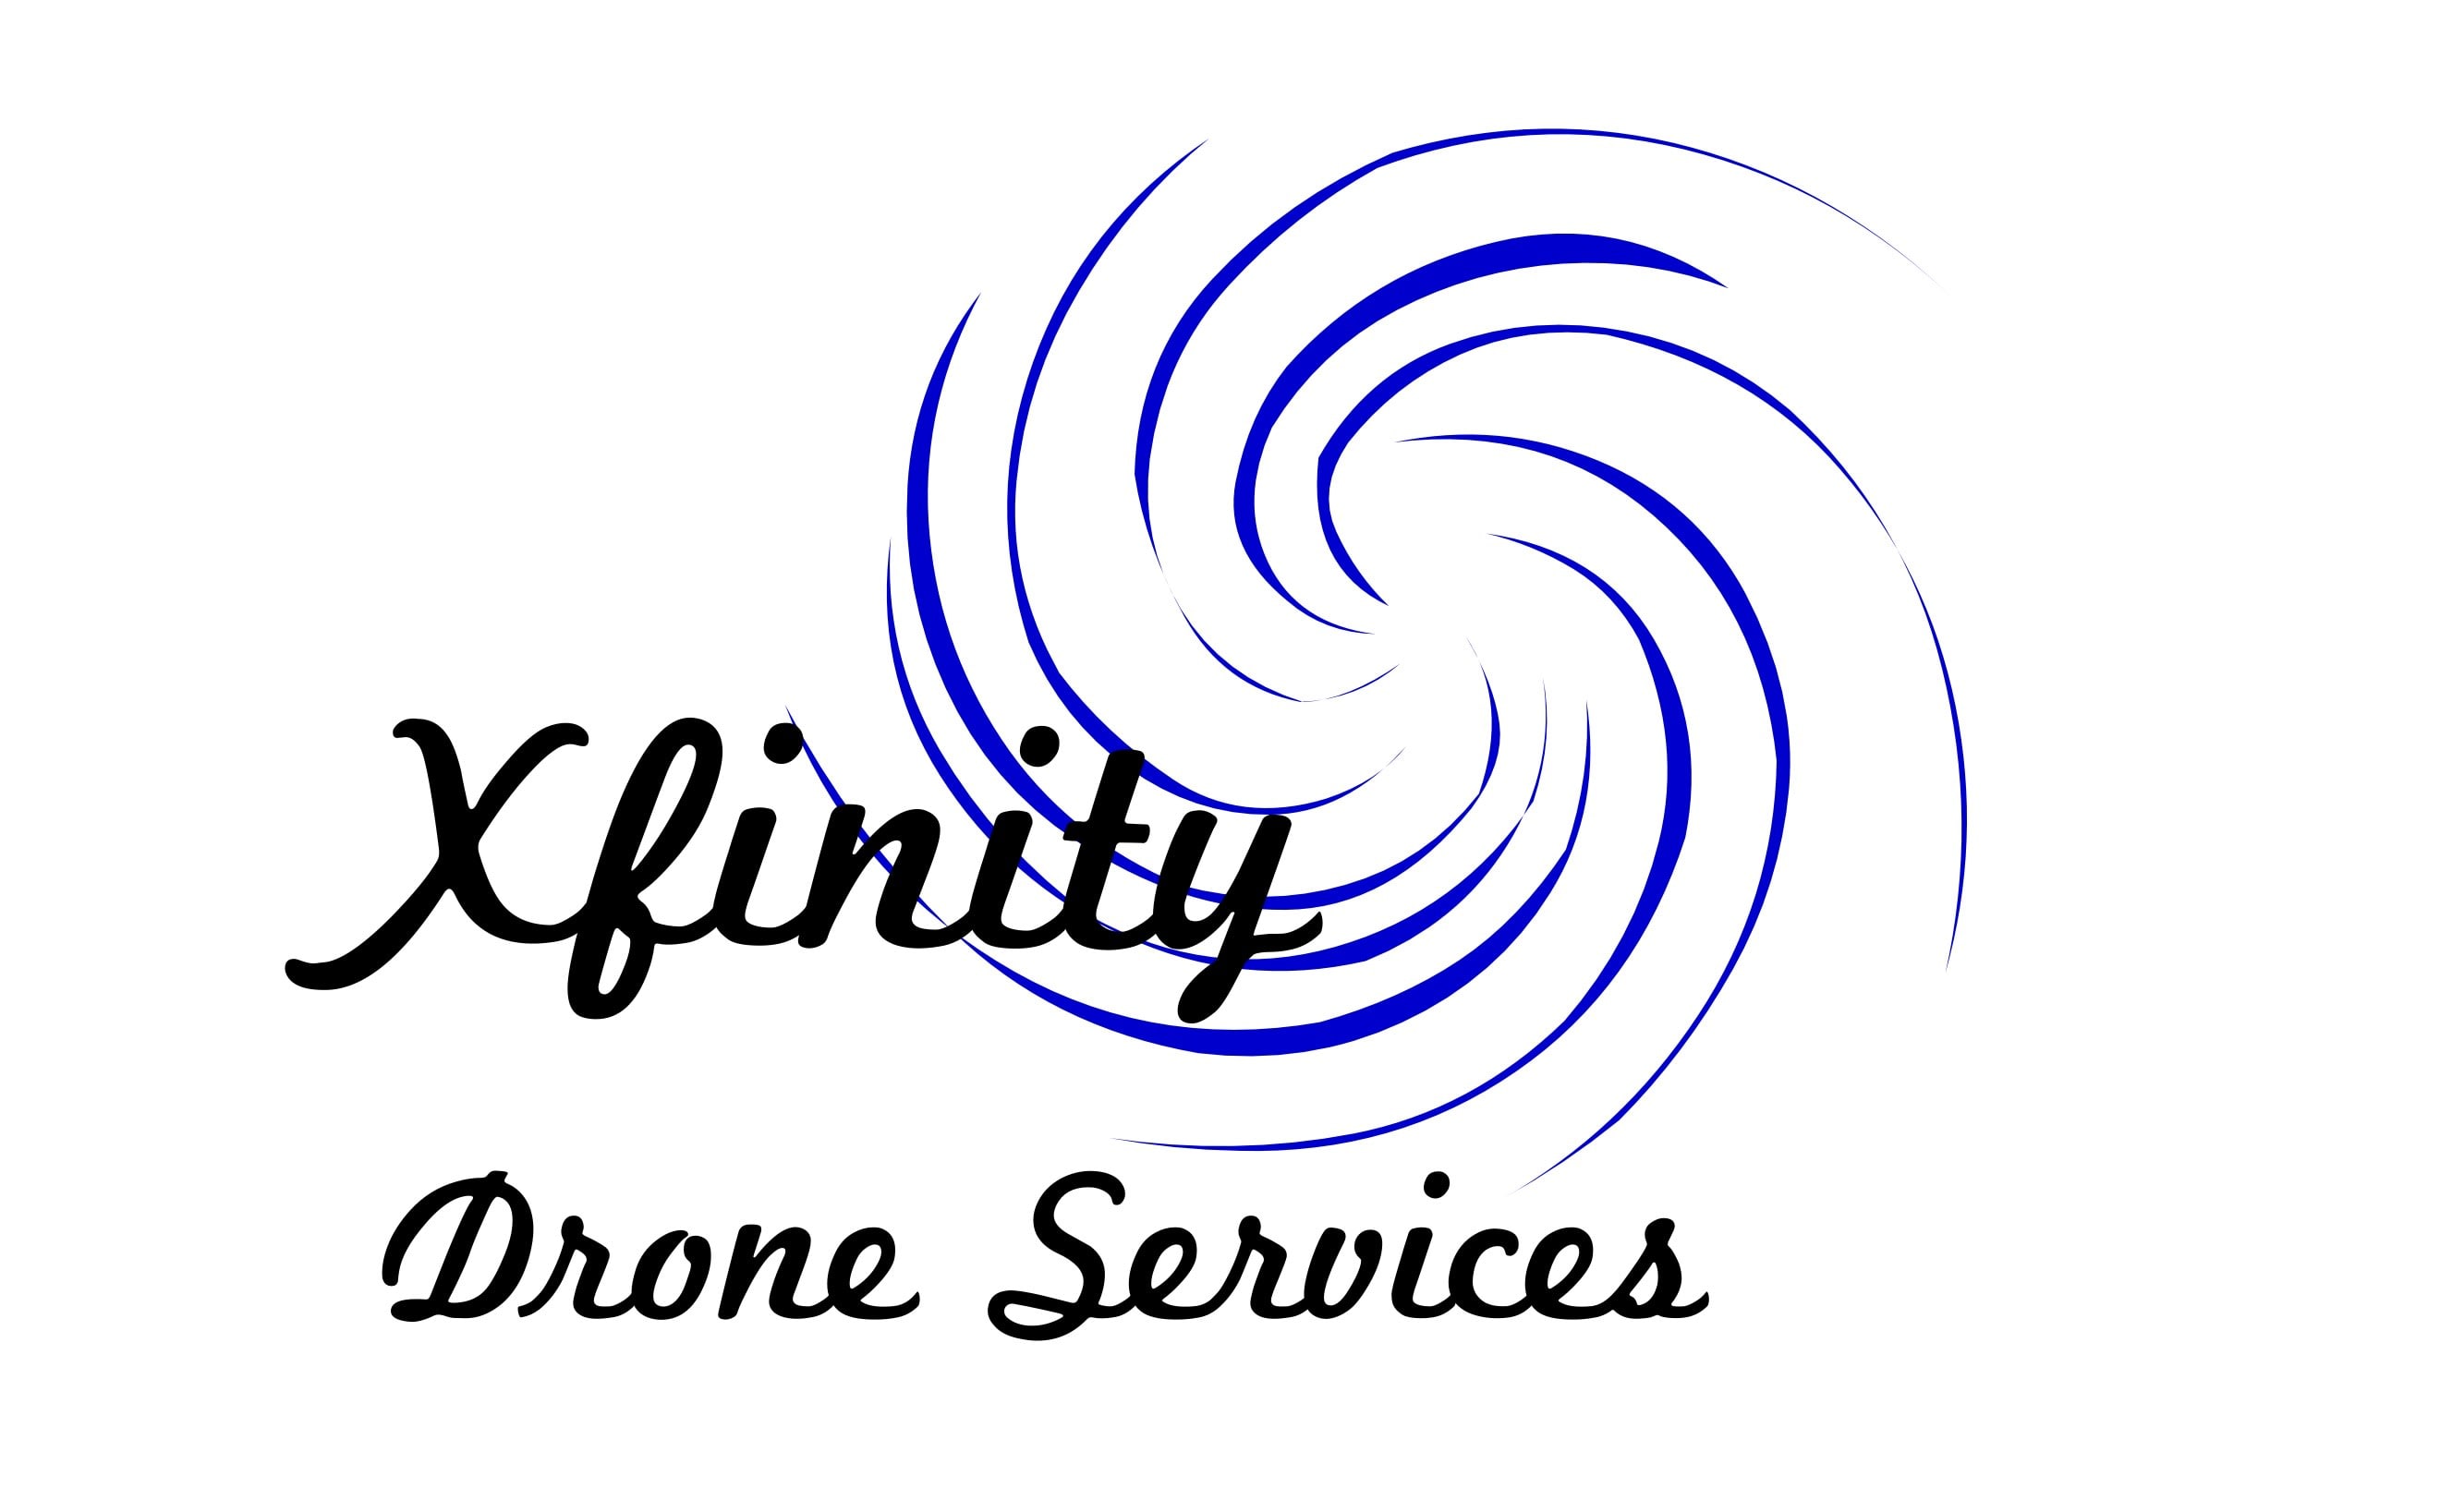 Xfinity Drone Services